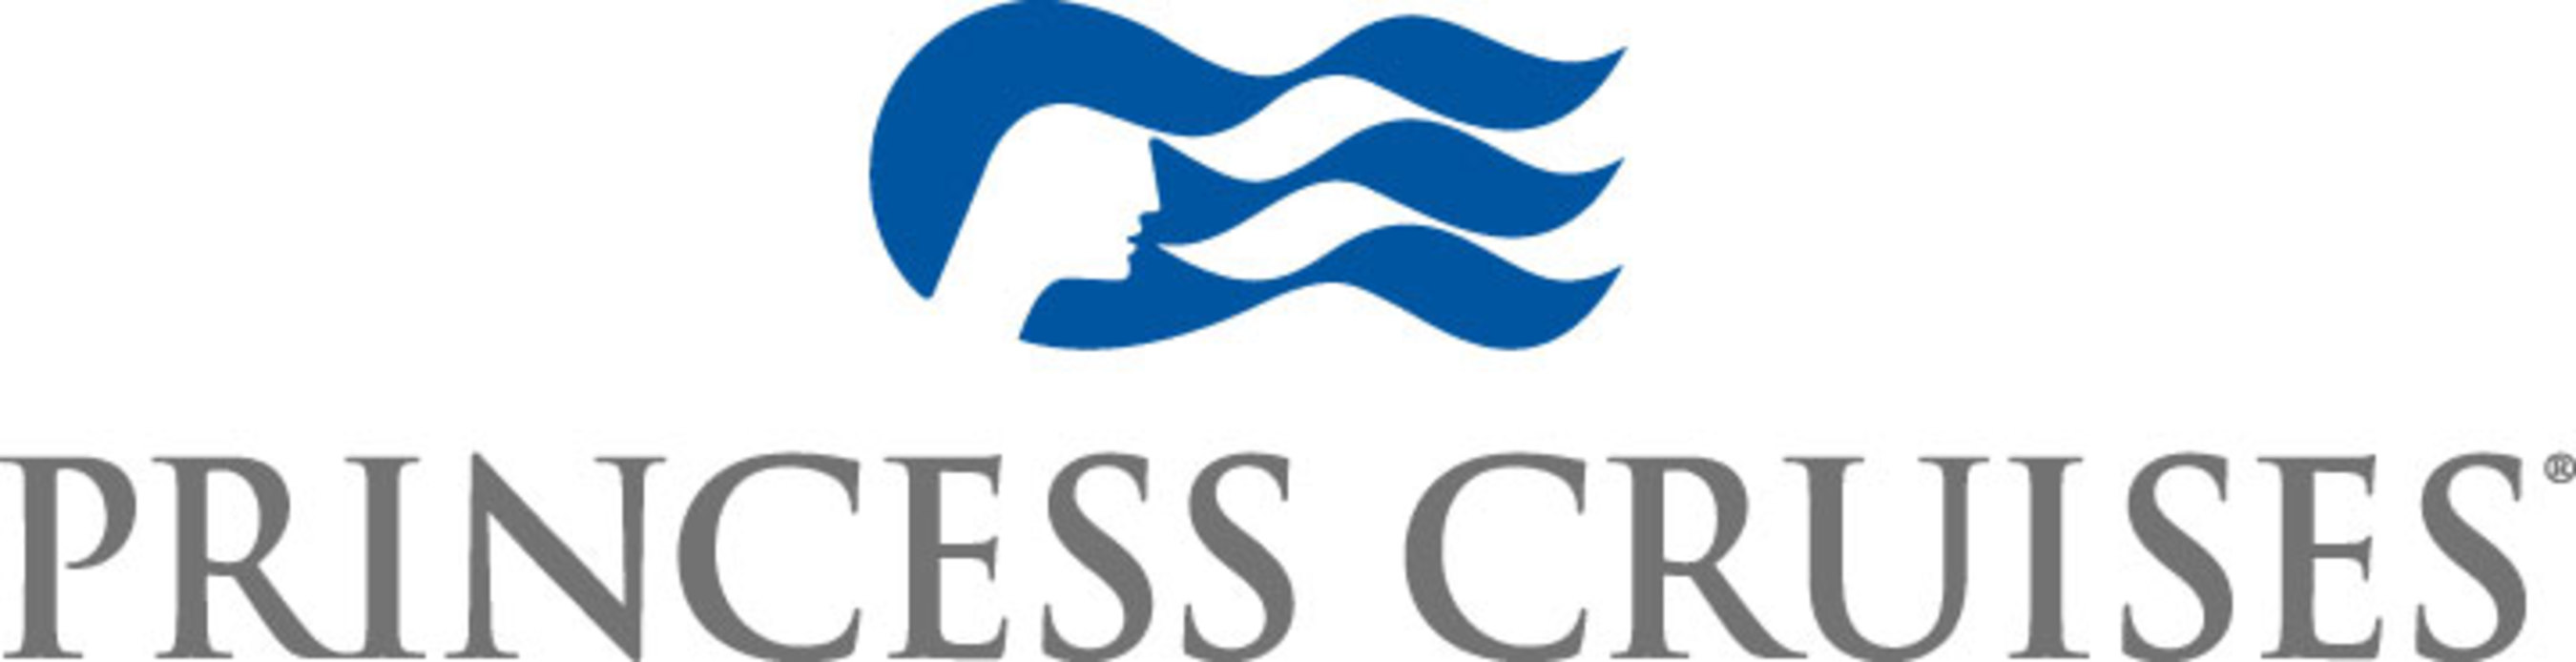 Princess Cruises Logo (PRNewsFoto/Princess Cruises)